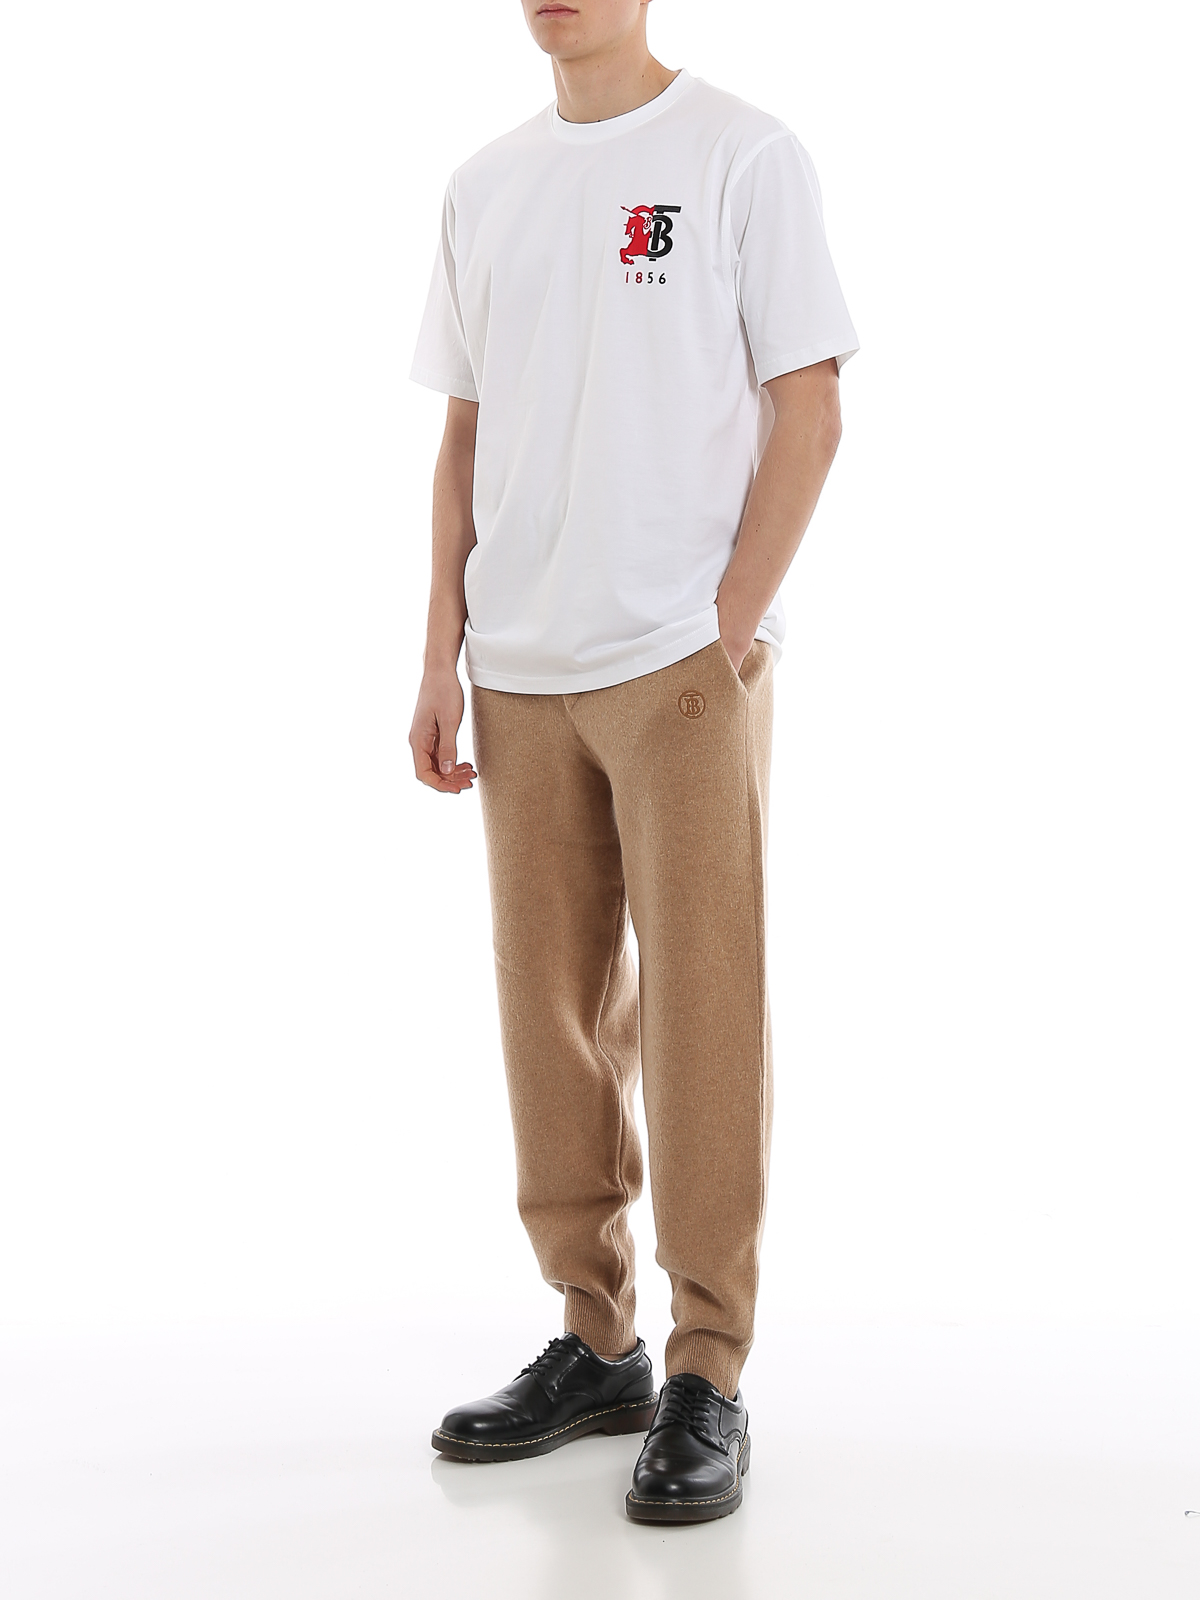 Tシャツ Burberry - Tシャツ - Hesford - 8022308 | iKRIX shop online